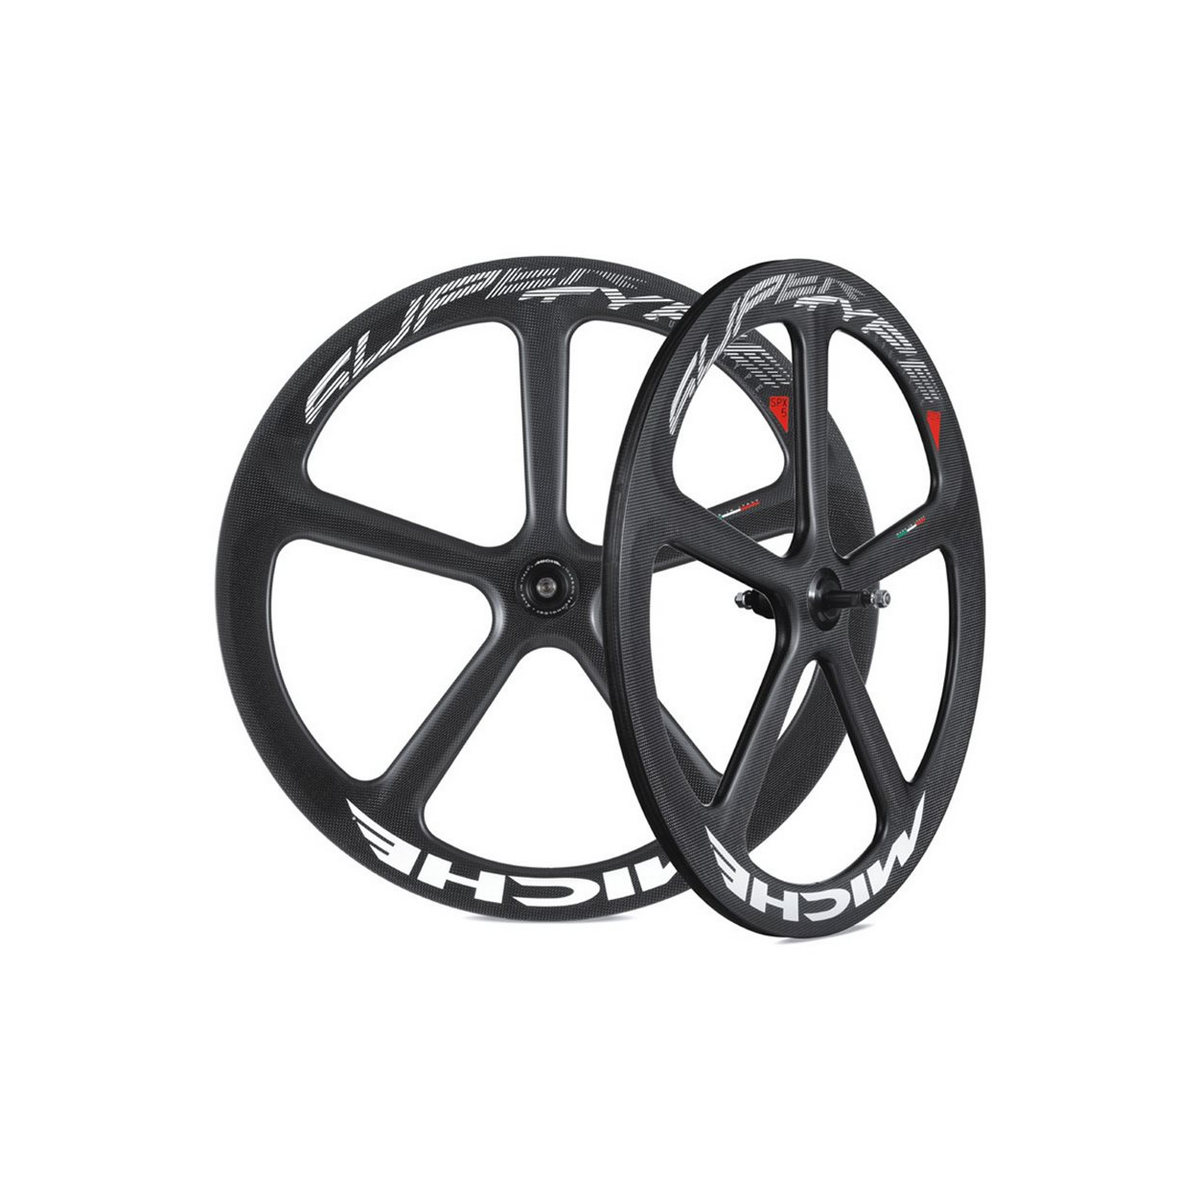 wheelset supertype spx5 carbon 3k tubular track black v17